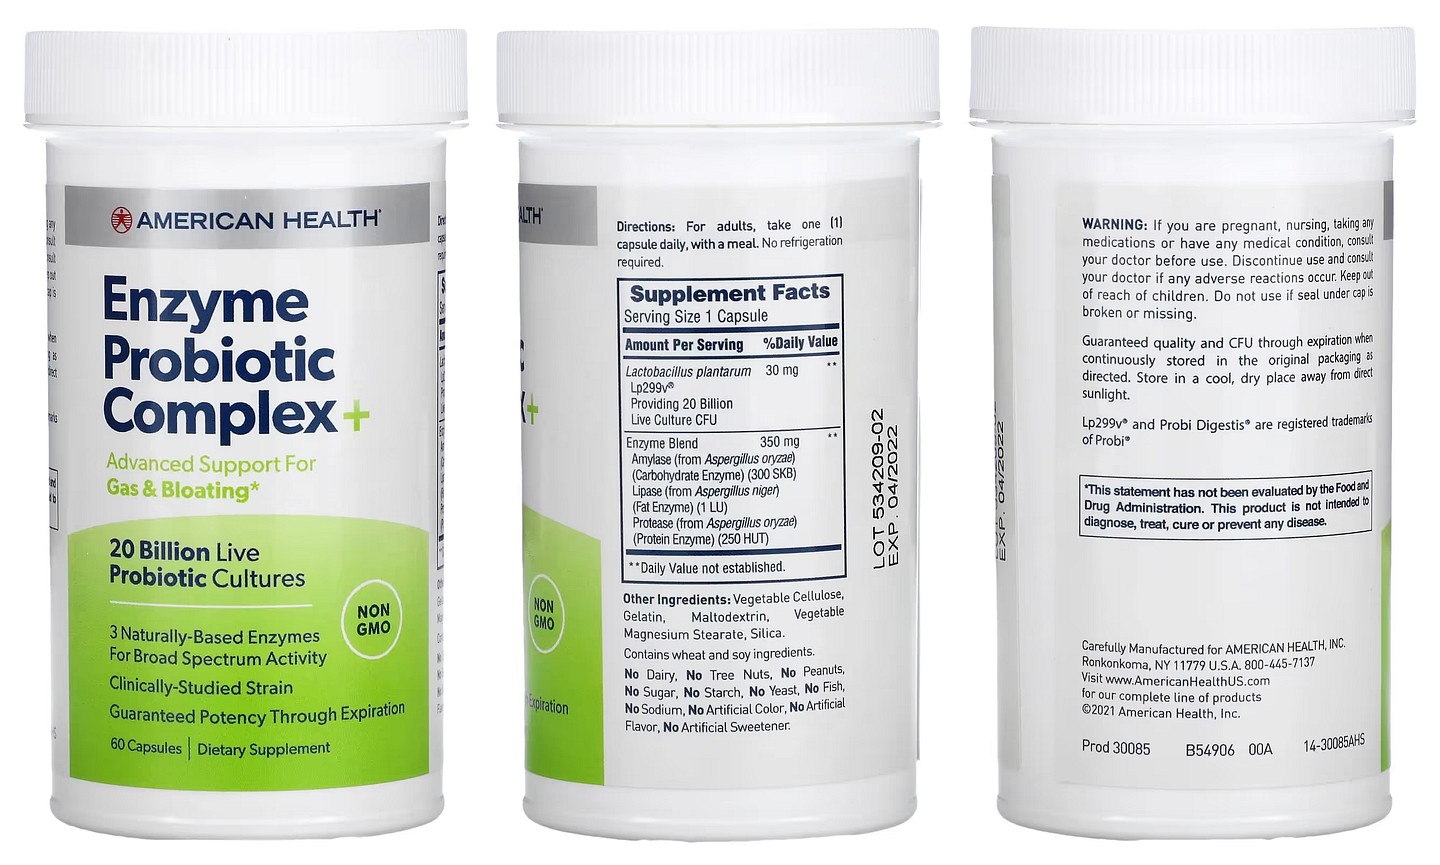 American Health, Enzyme Probiotic Complex+ packaging